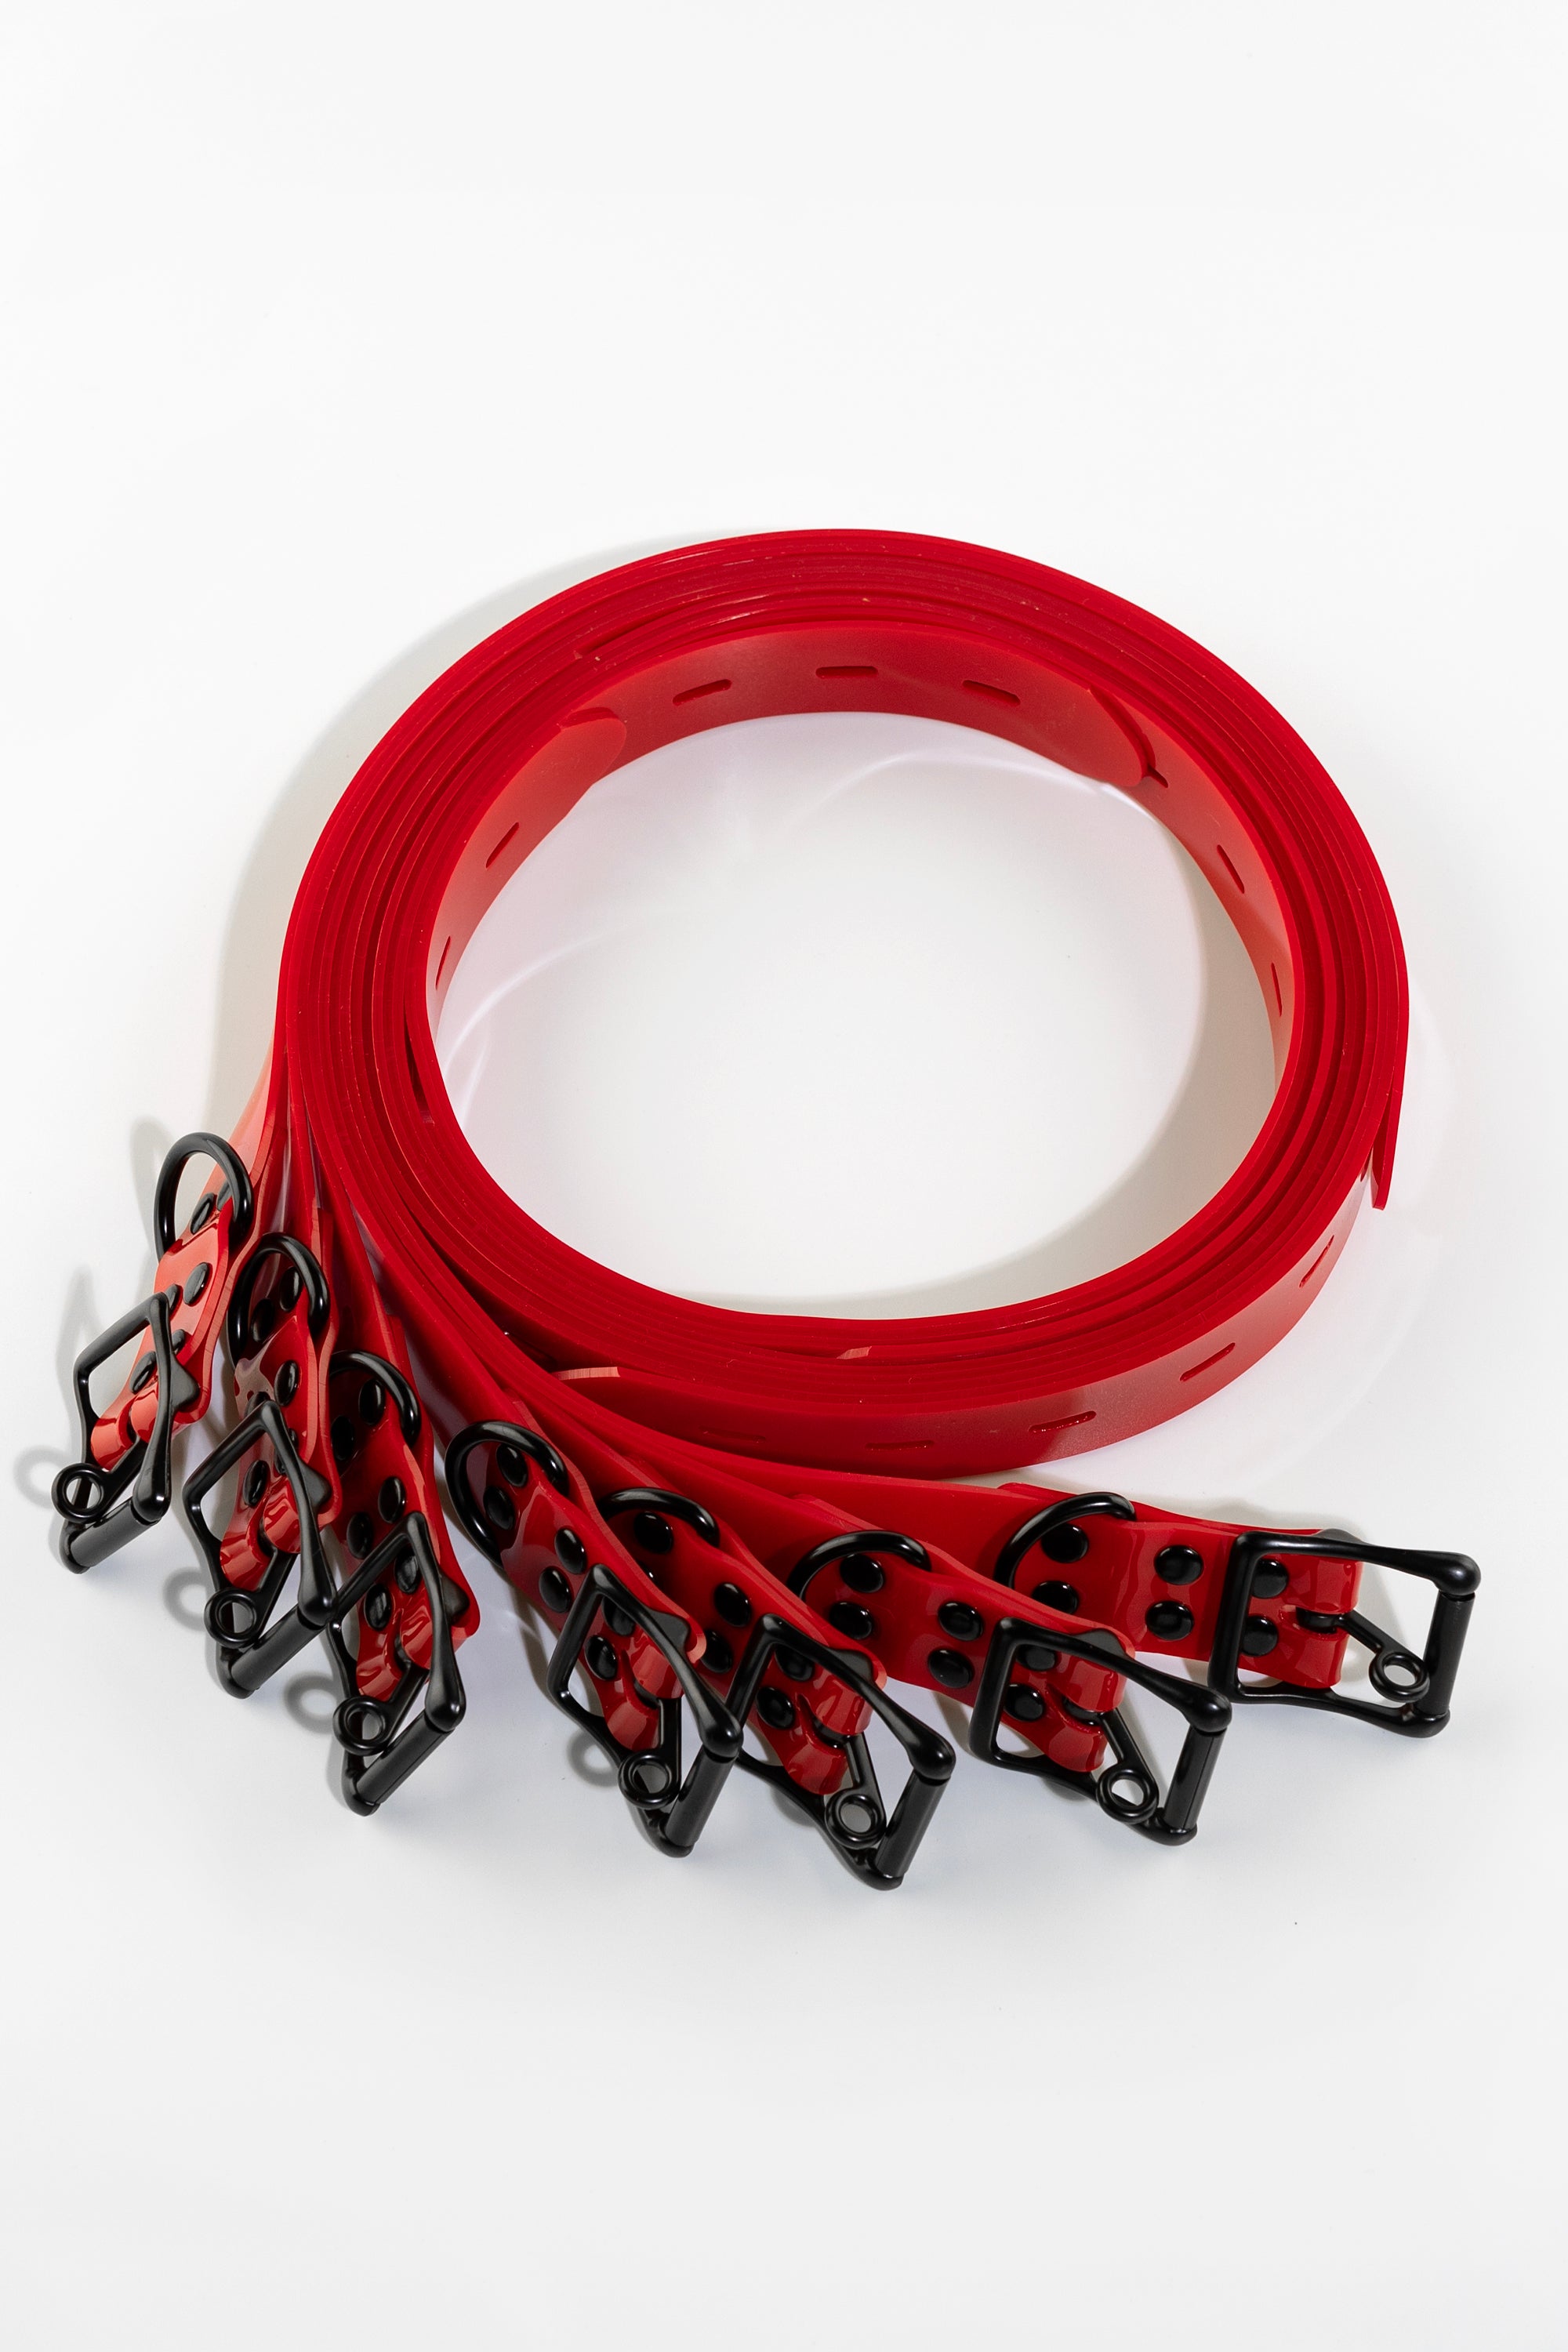 Bondage lockable straps set 25 mm, red/black